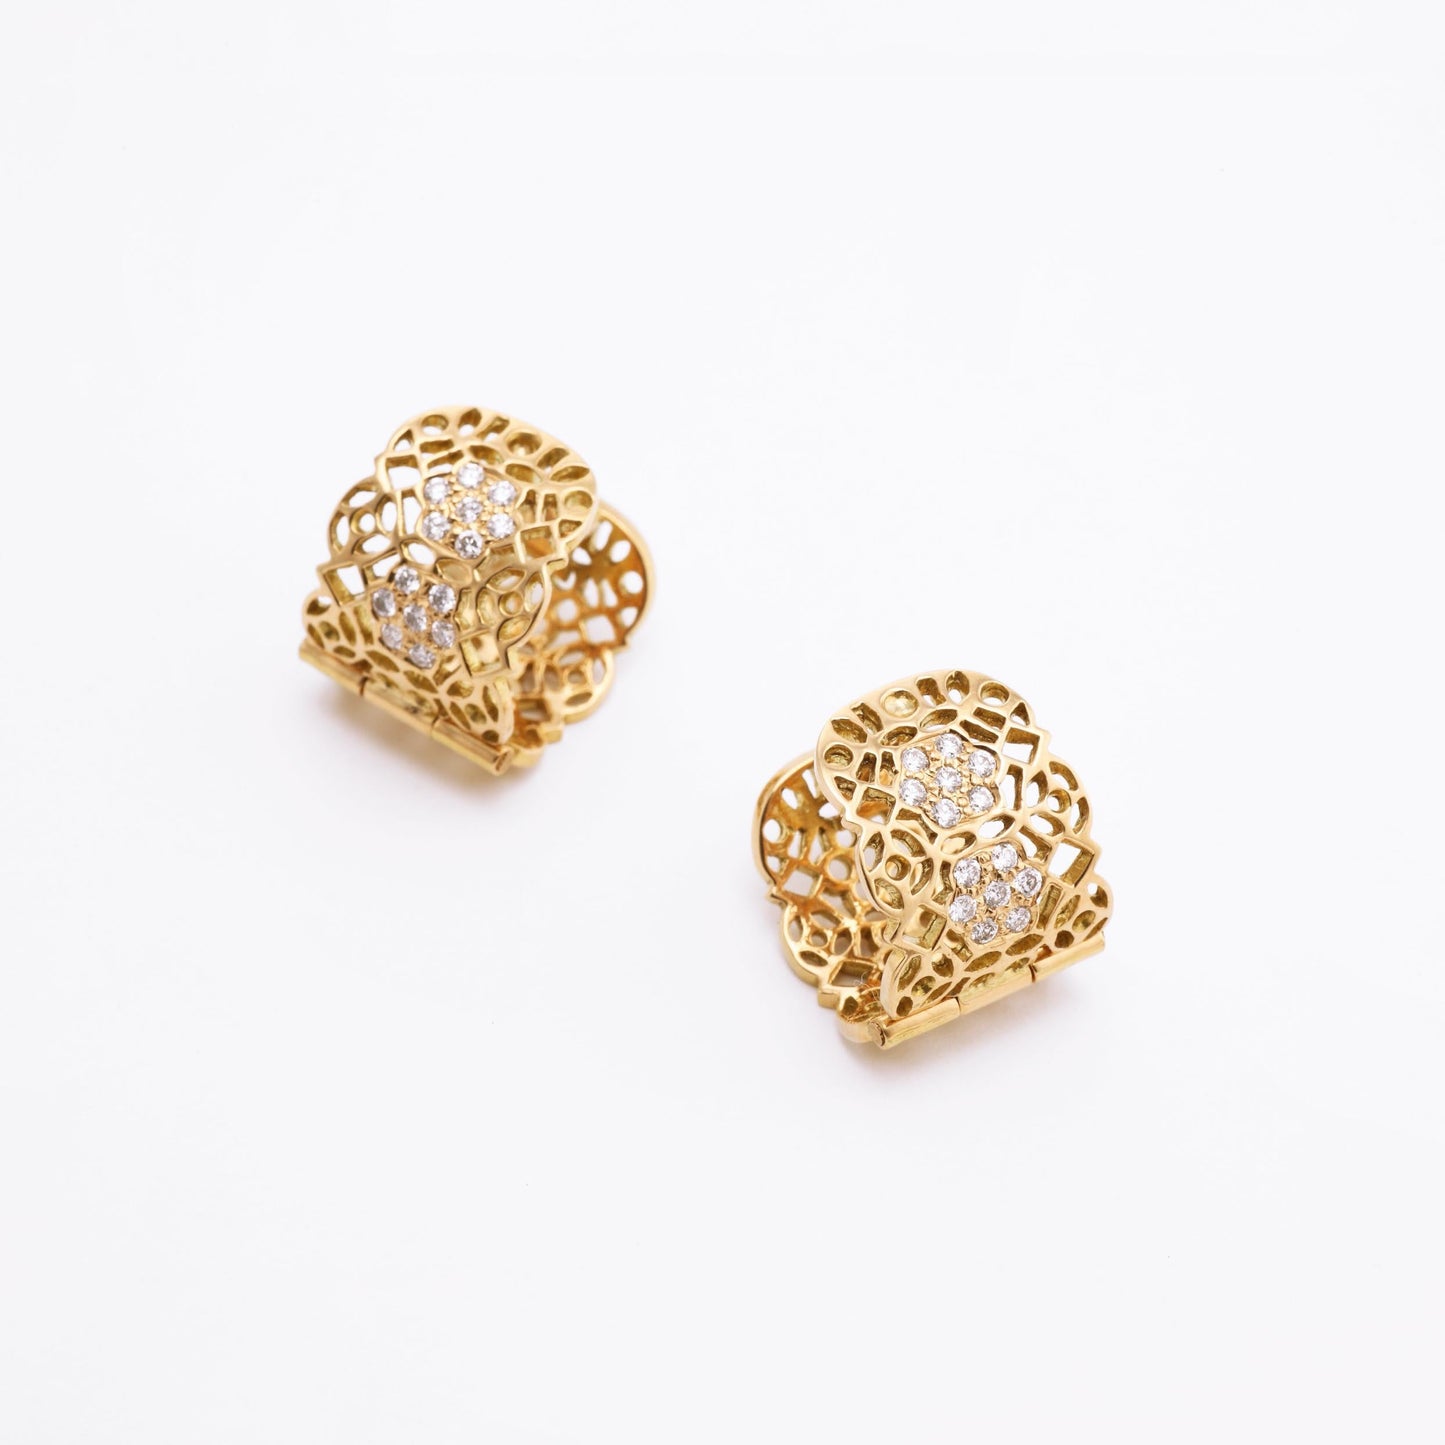 The Asha Lace Series Gold and Diamond Bali by Rasvihar